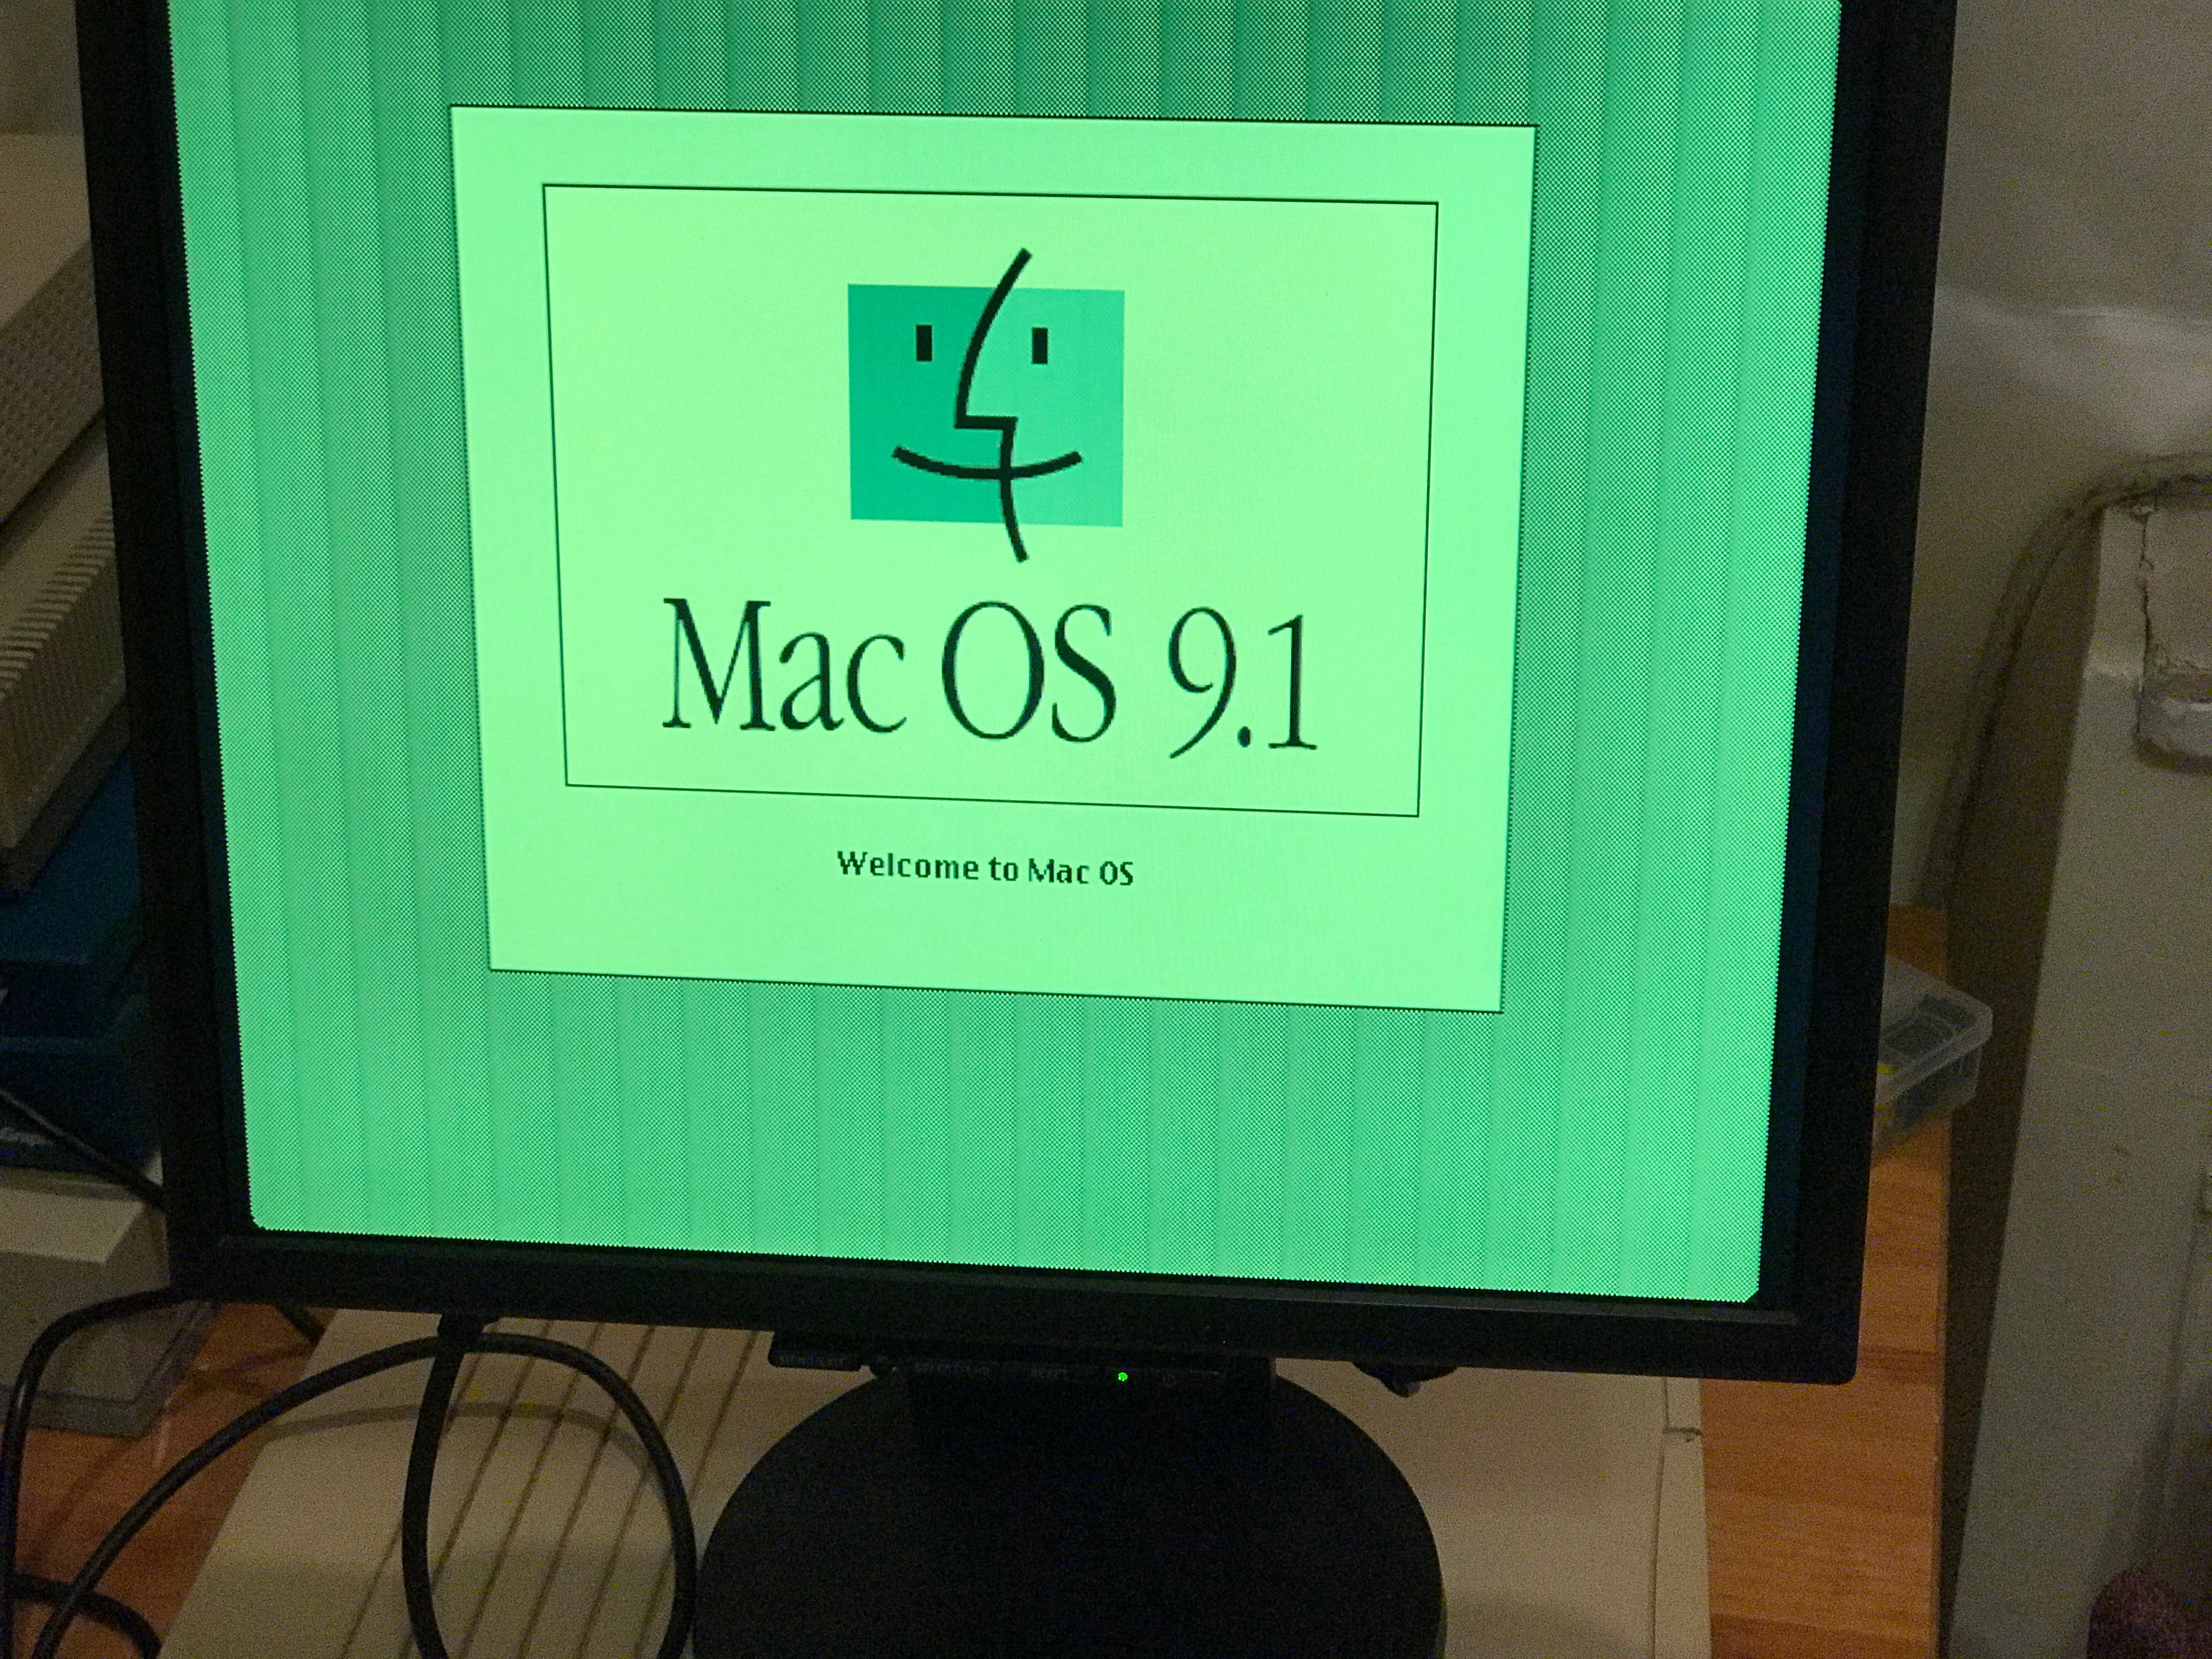 mac os 9.1 boot screen